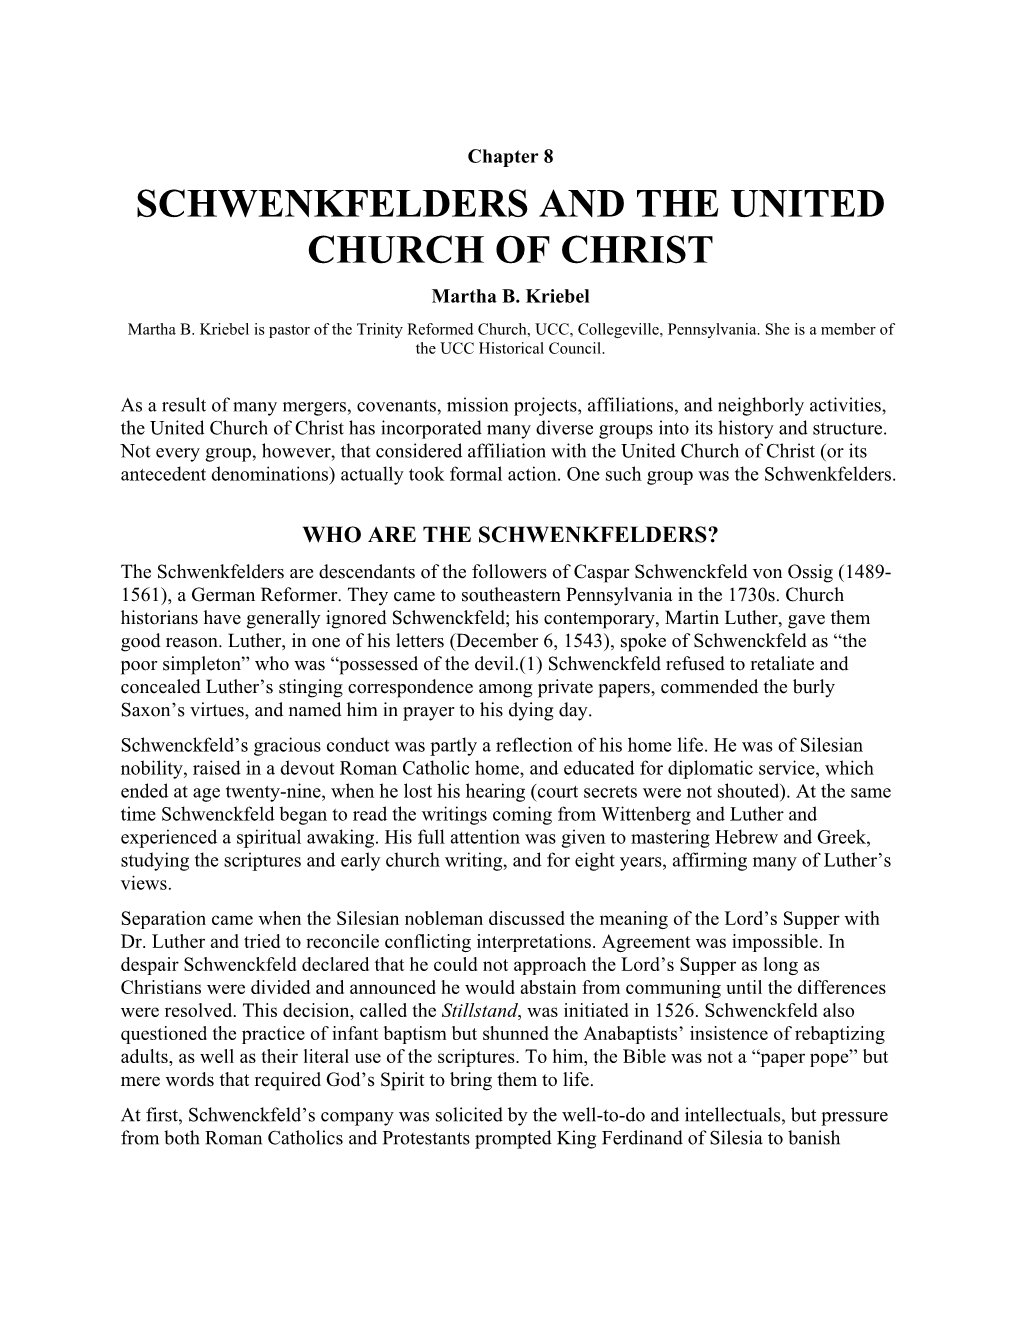 Schwenkfelders and the United Church of Christ